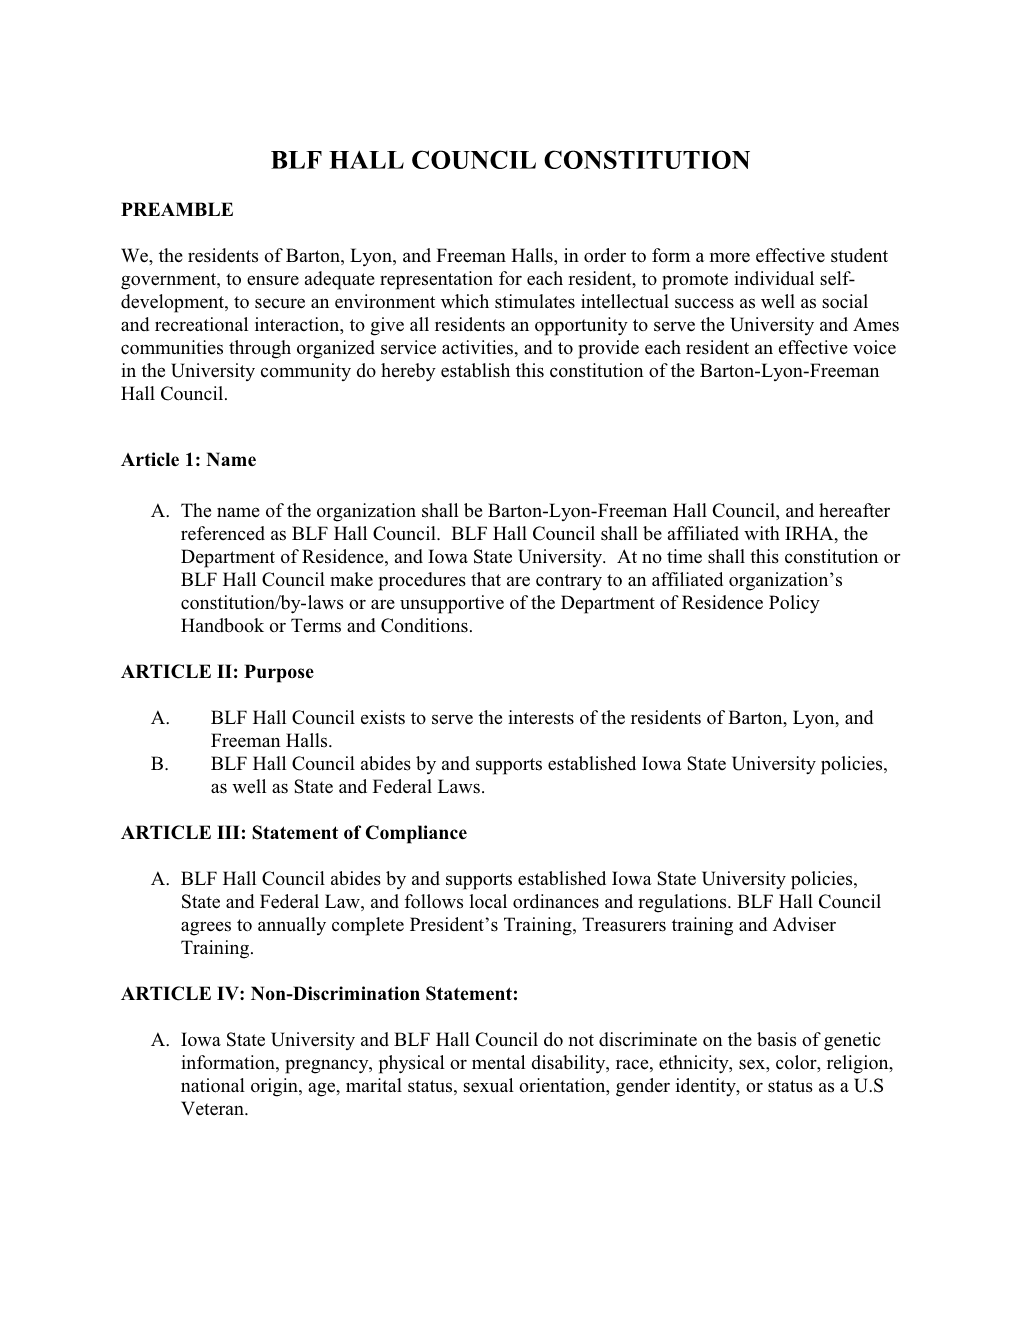 BLFF/N Hall Constitution